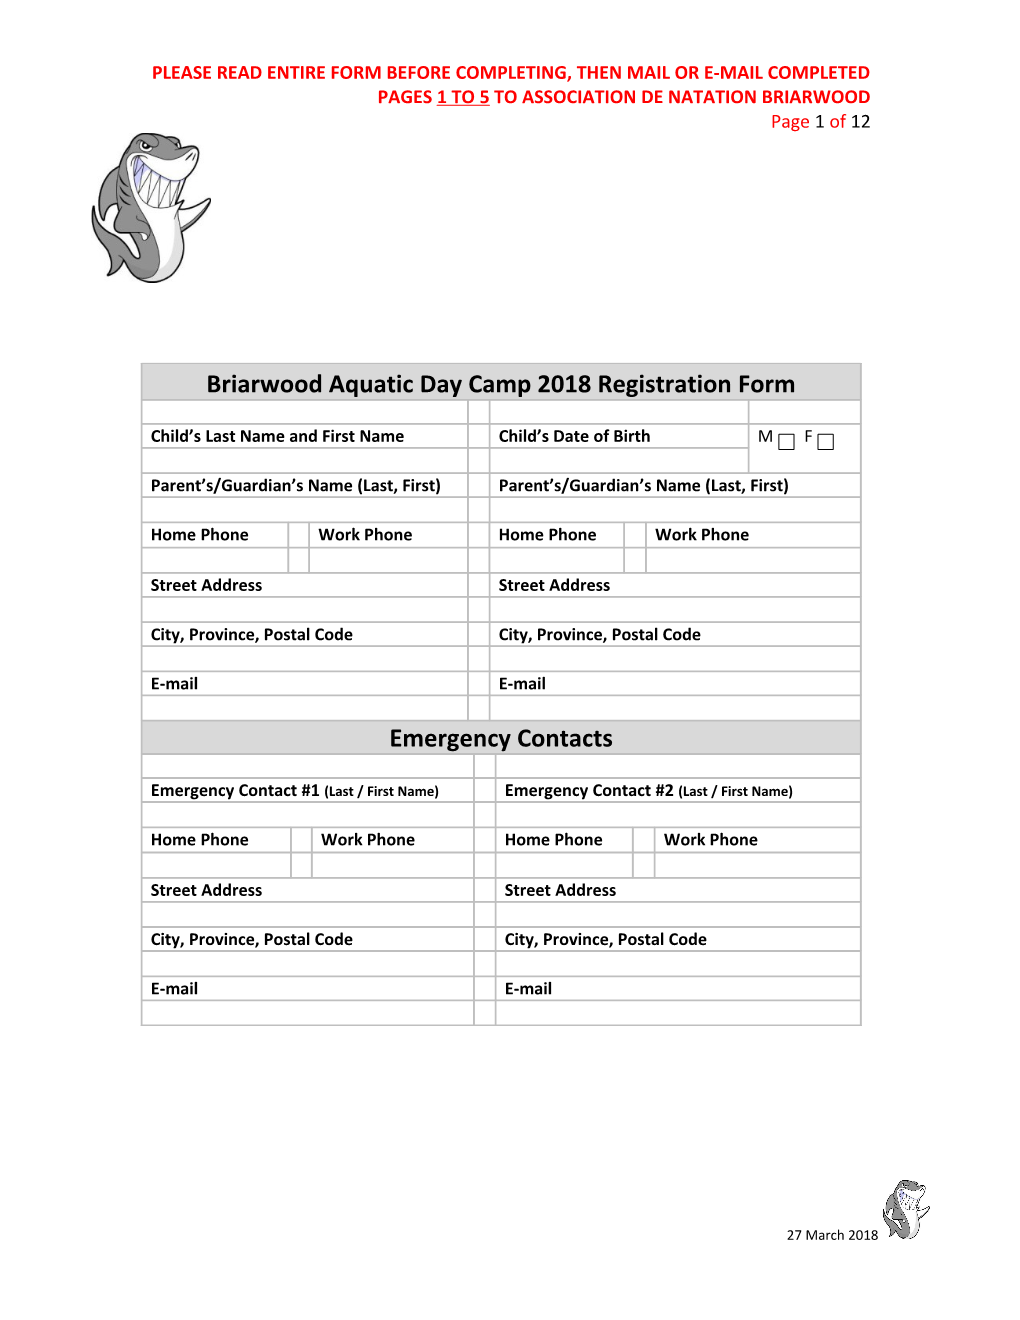 Briarwood Aquatic Day Camp 2018 Registration Form